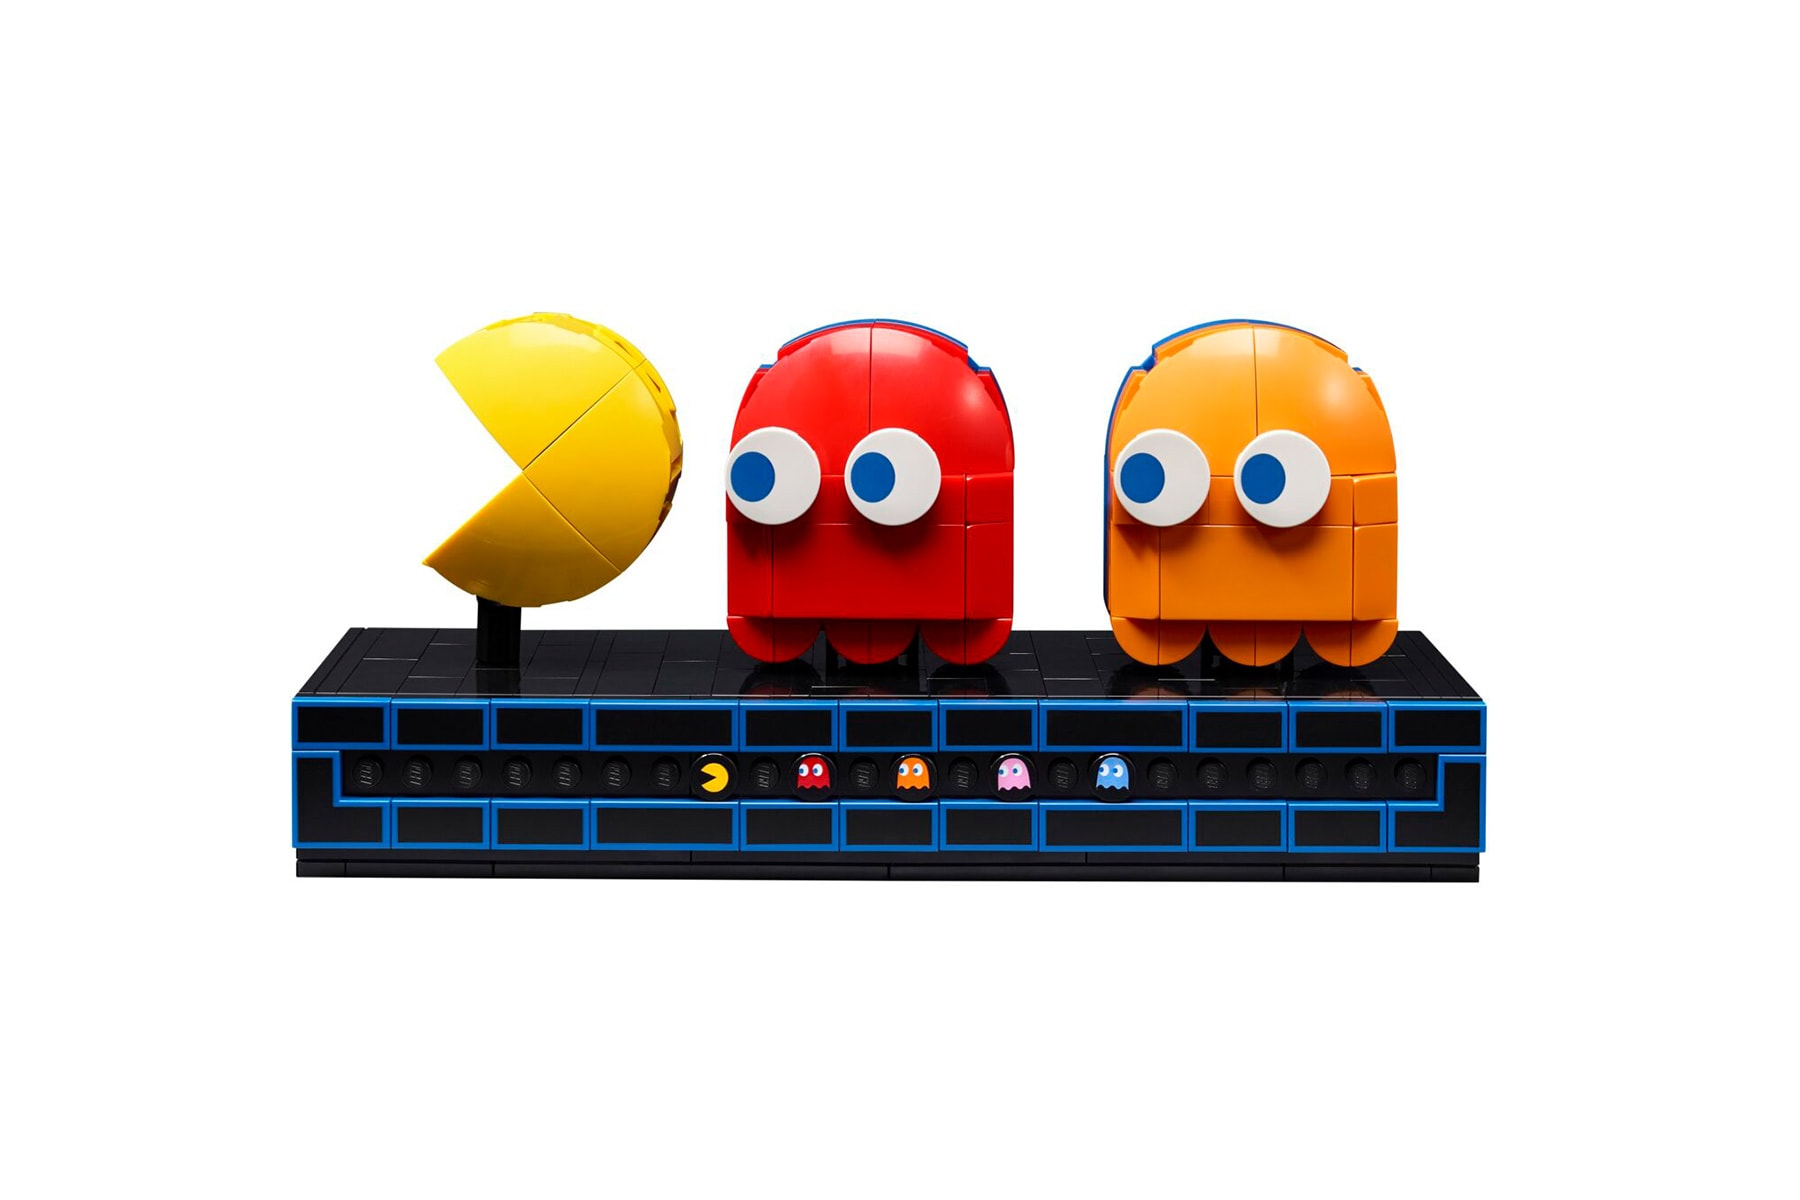 LEGO 推出經典街機遊戲《Pac-Man》主題積木套裝